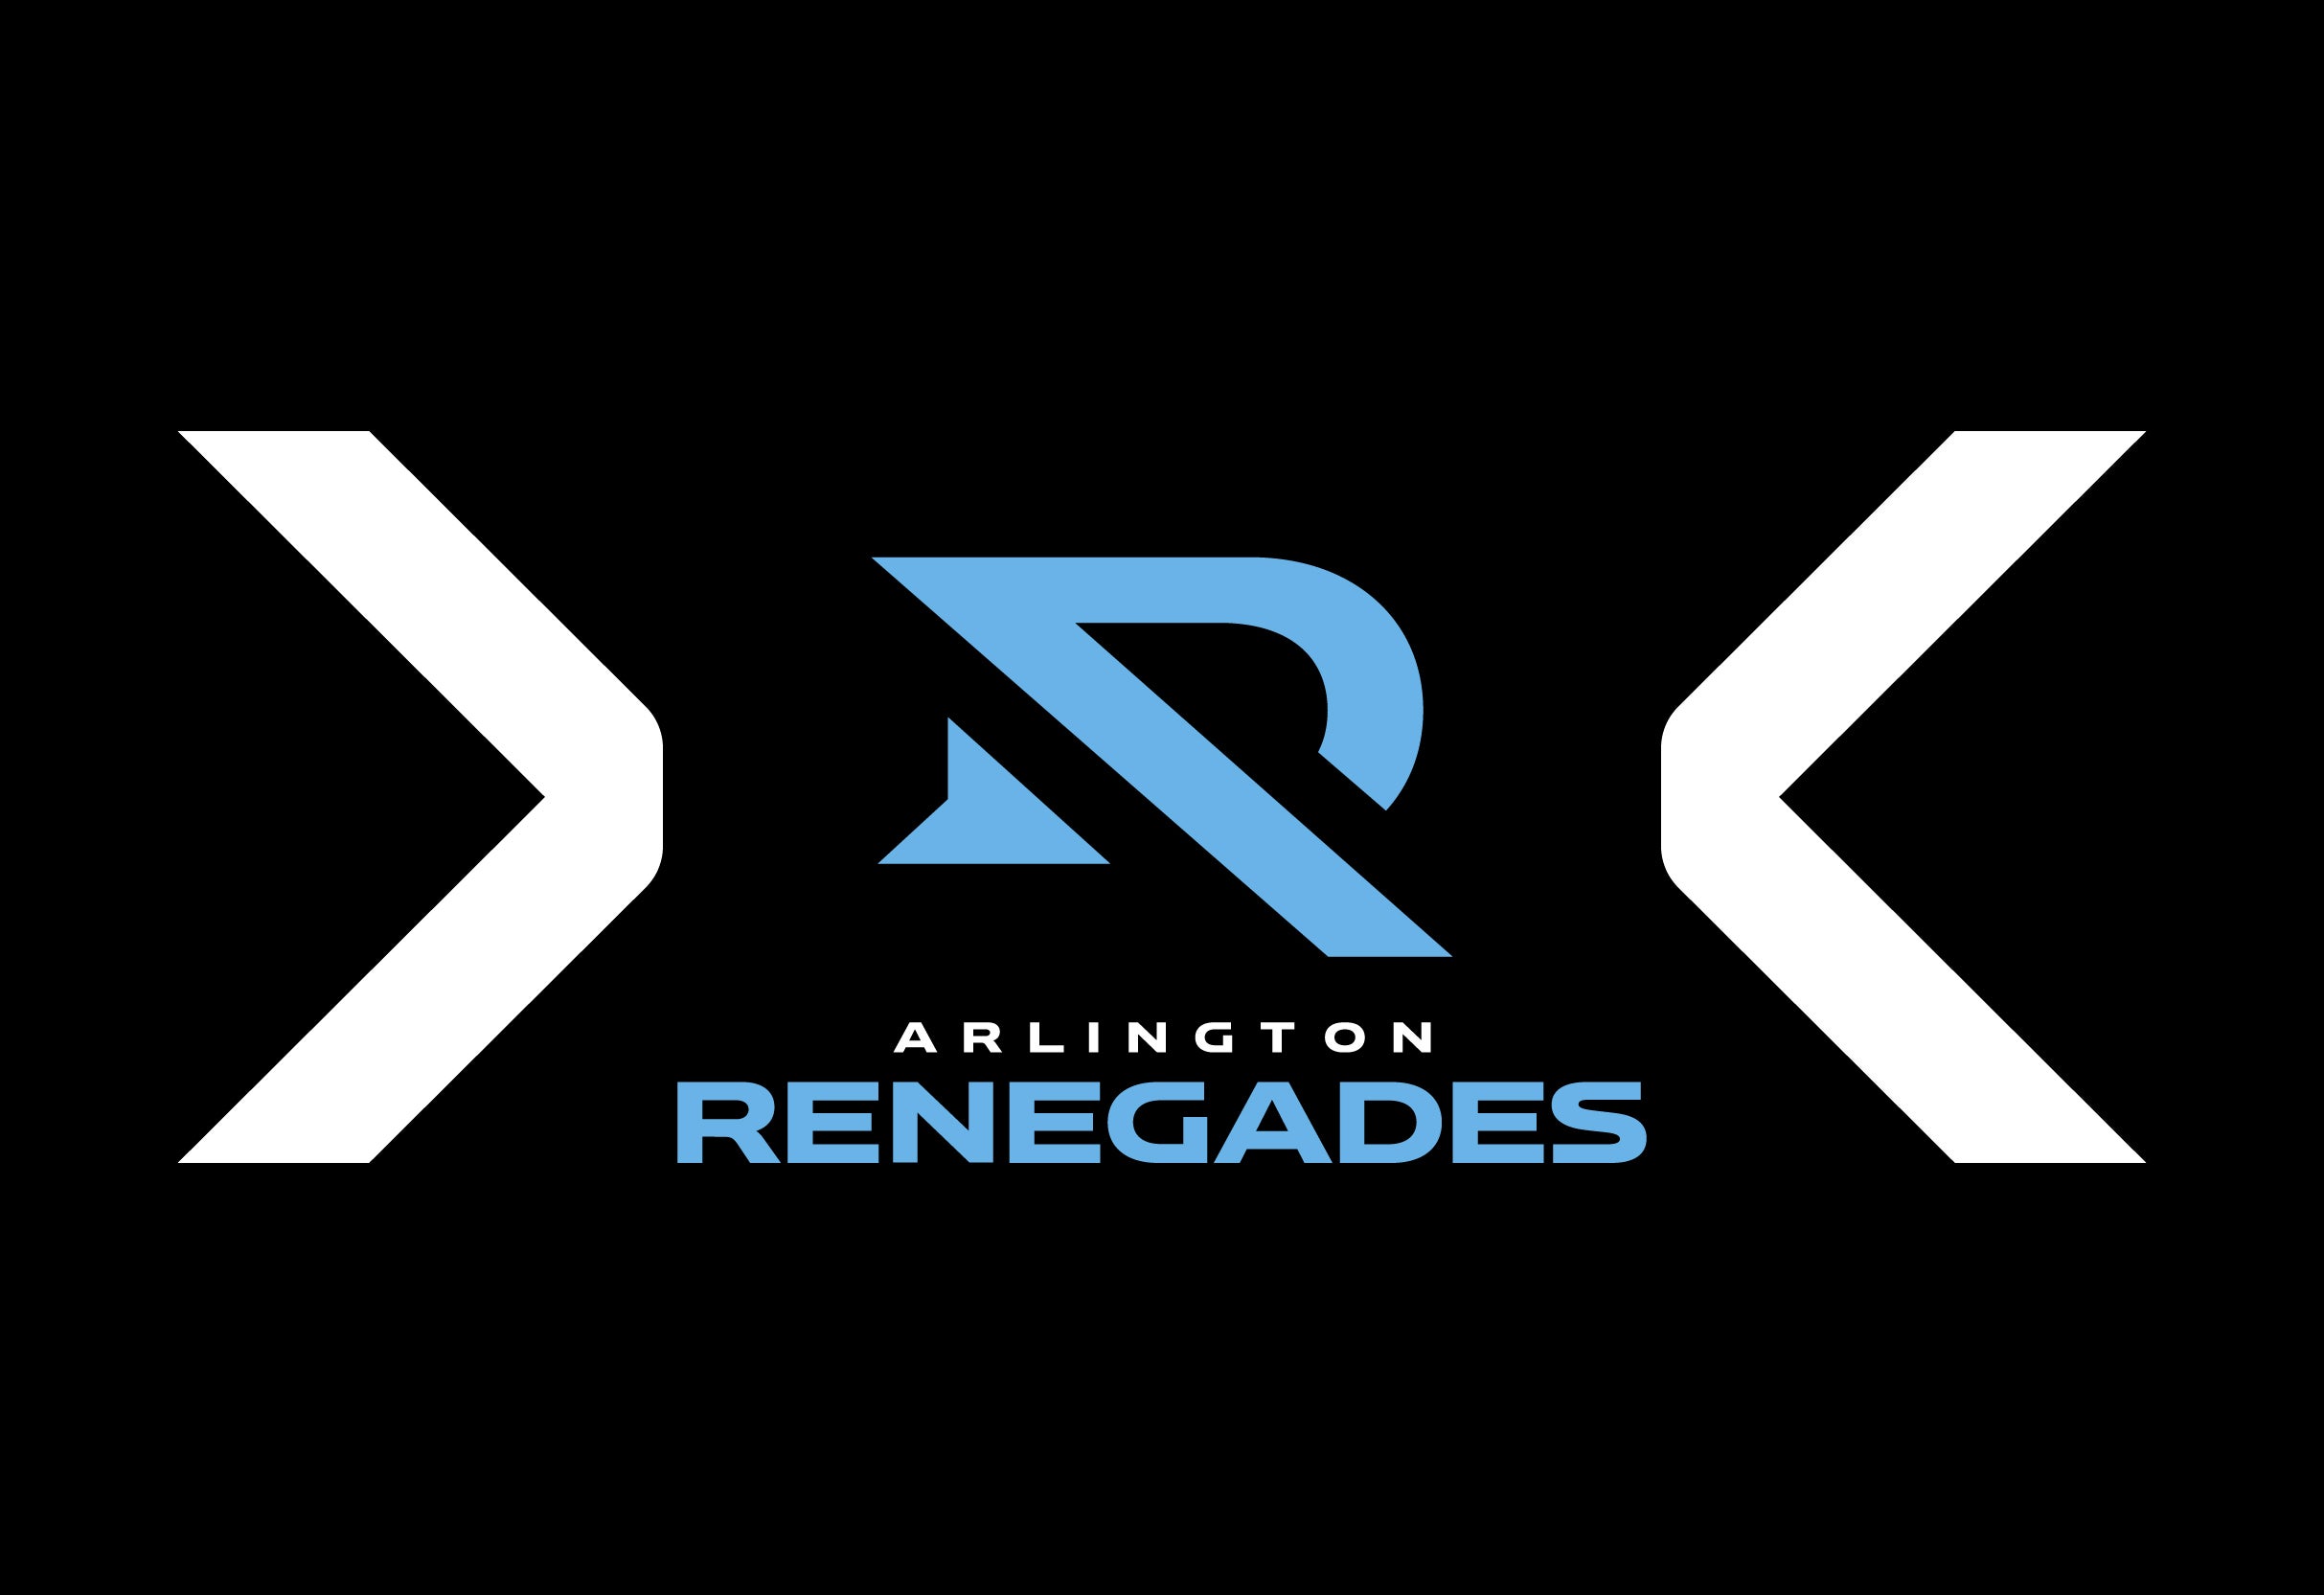 Arlington Renegades vs. Houston Roughnecks in Arlington promo photo for XFL presale offer code